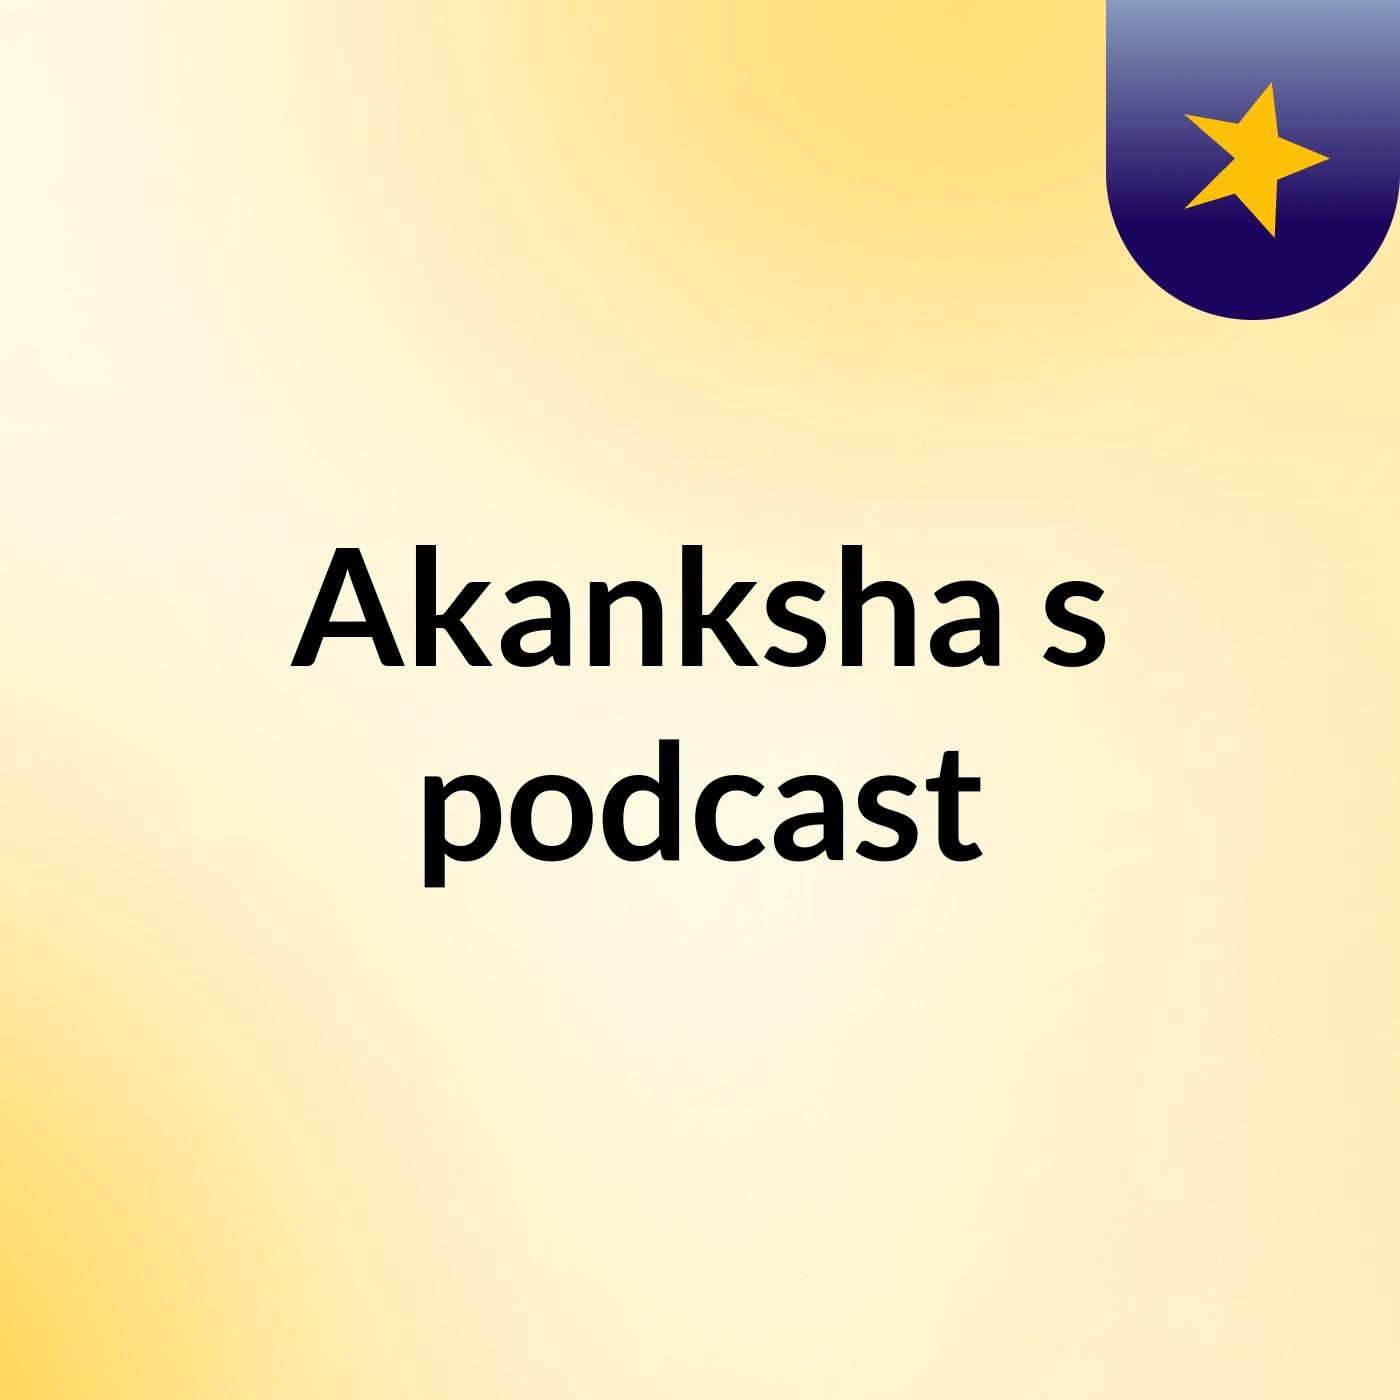 Episode 2 - Akanksha's podcast